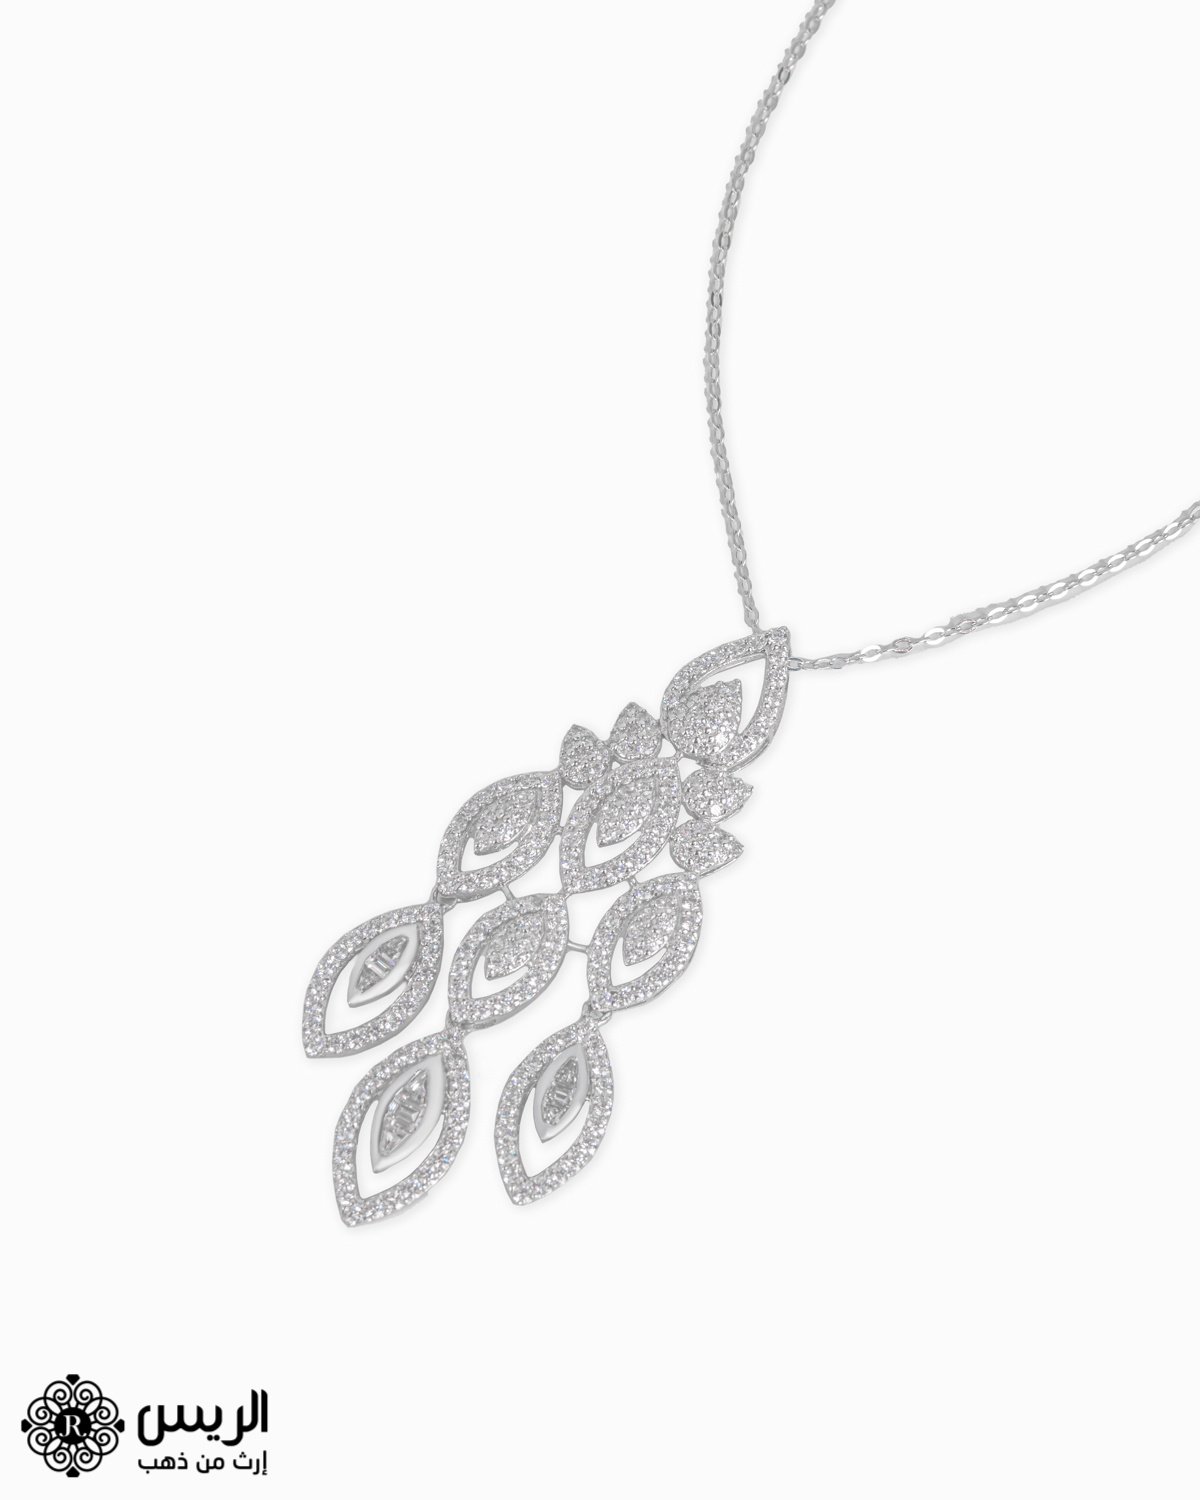 Raies jewelry Pendant with Chain Elegant تعليقة مع سلسله ناعمة الريس للمجوهرات